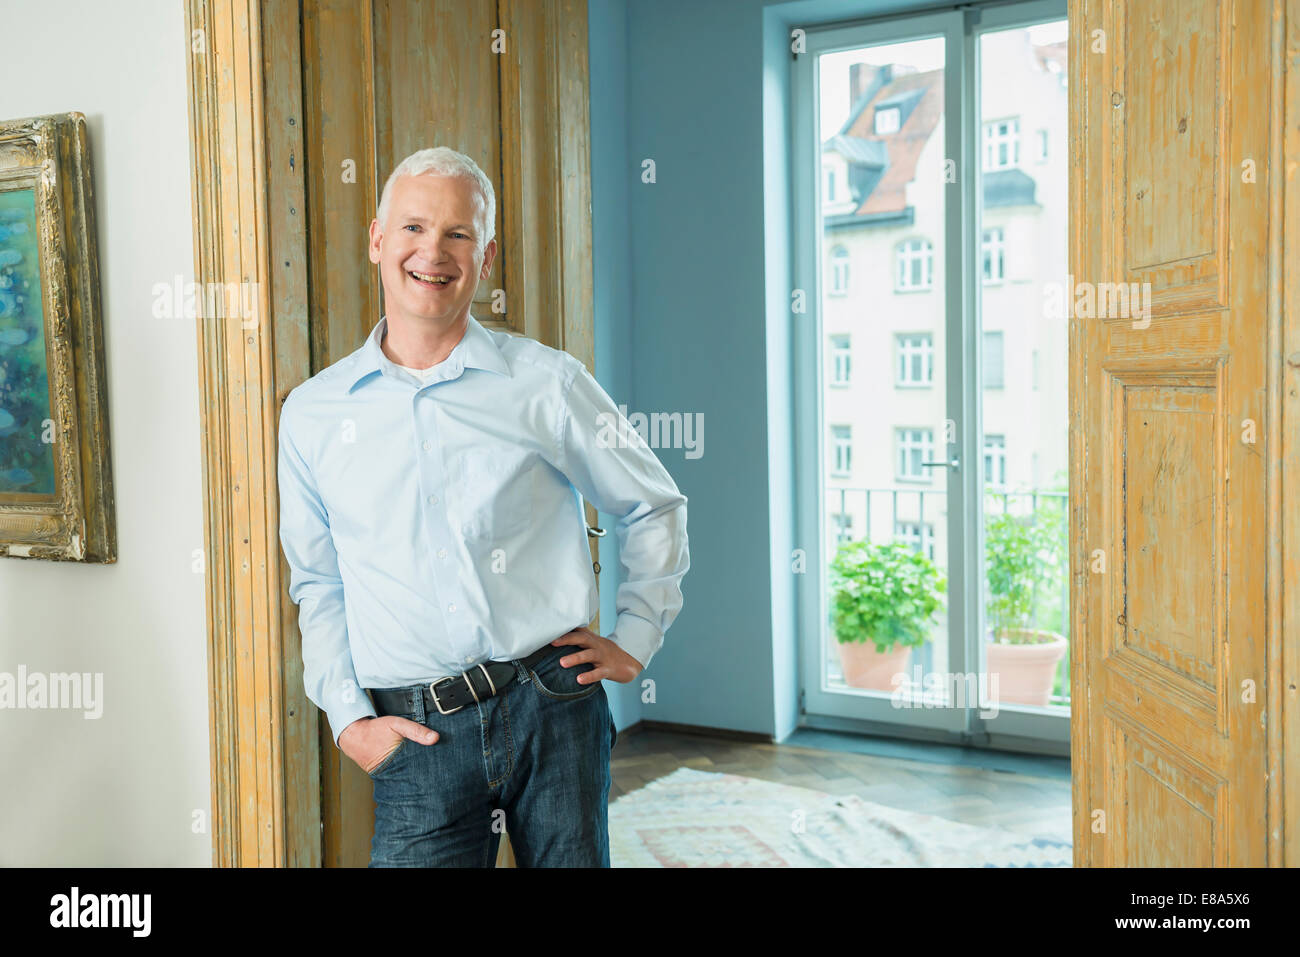 Portrait of mature man leaning against door, smiling Stock Photo